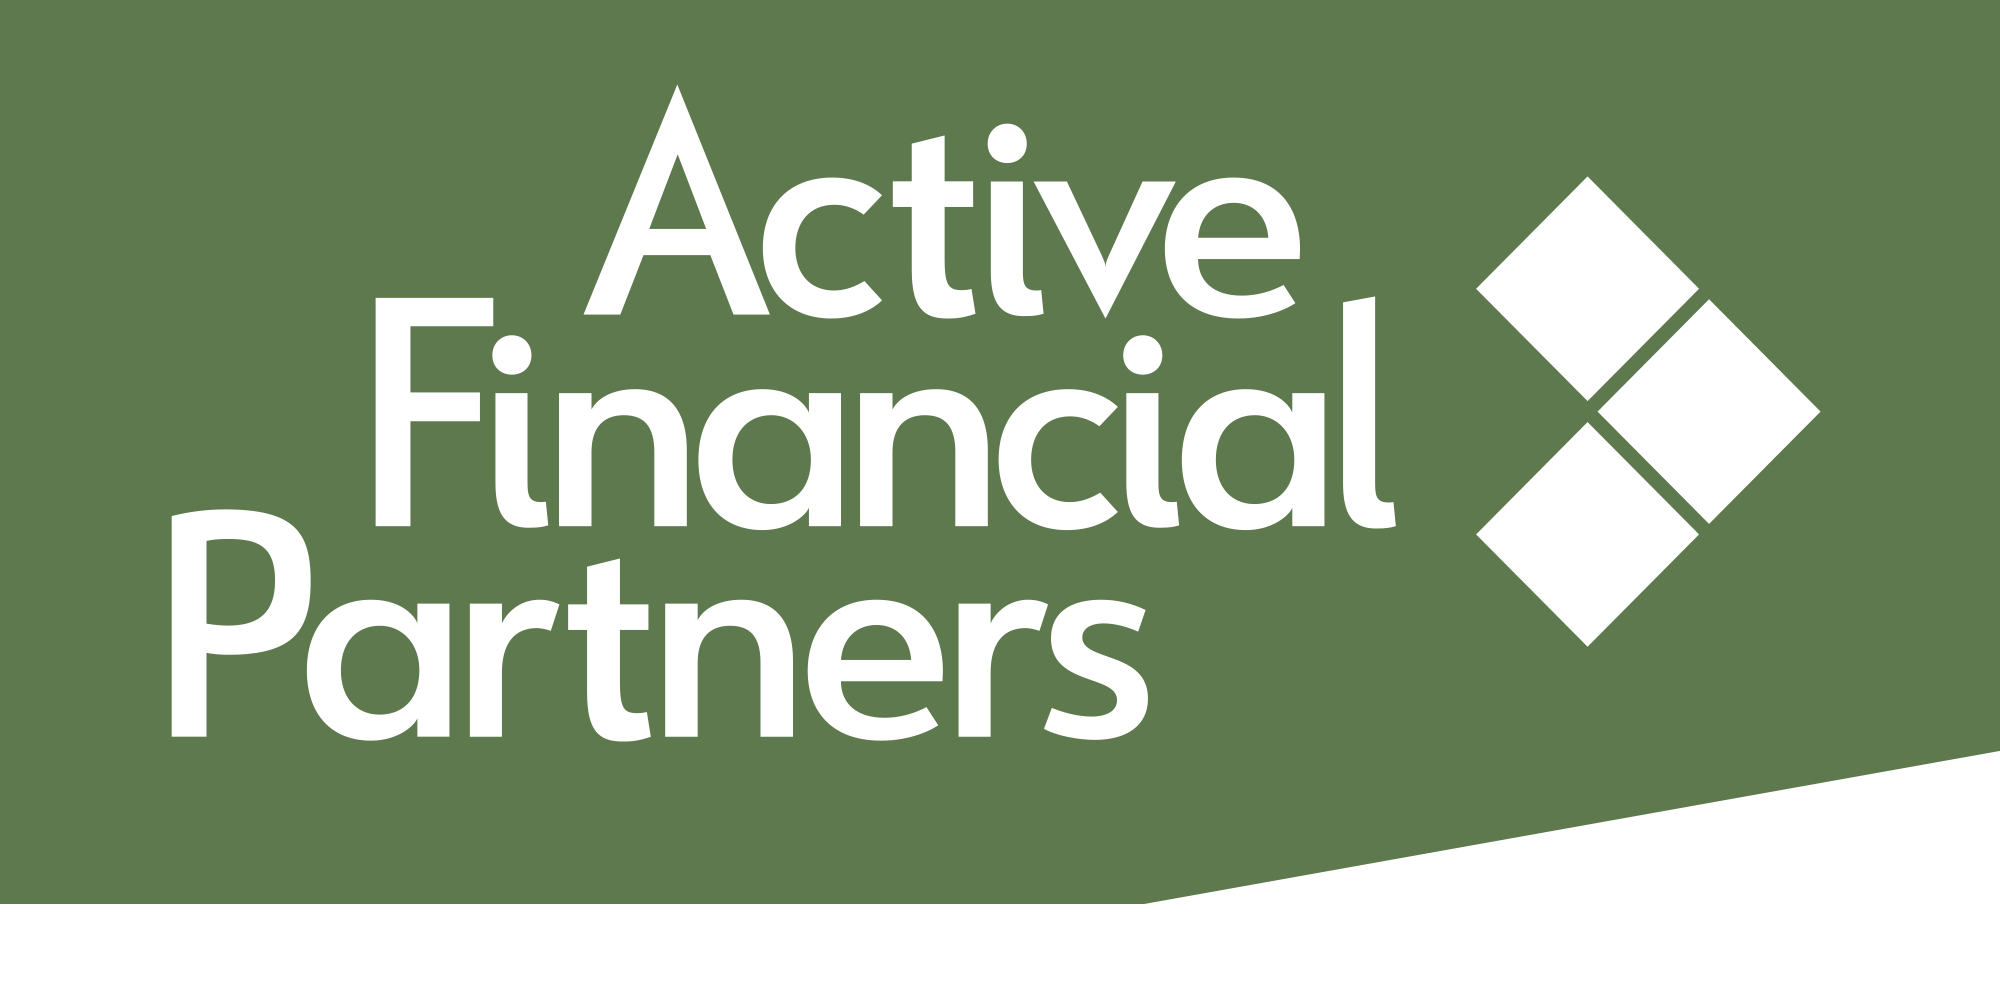 Active Financial Partners Ltd